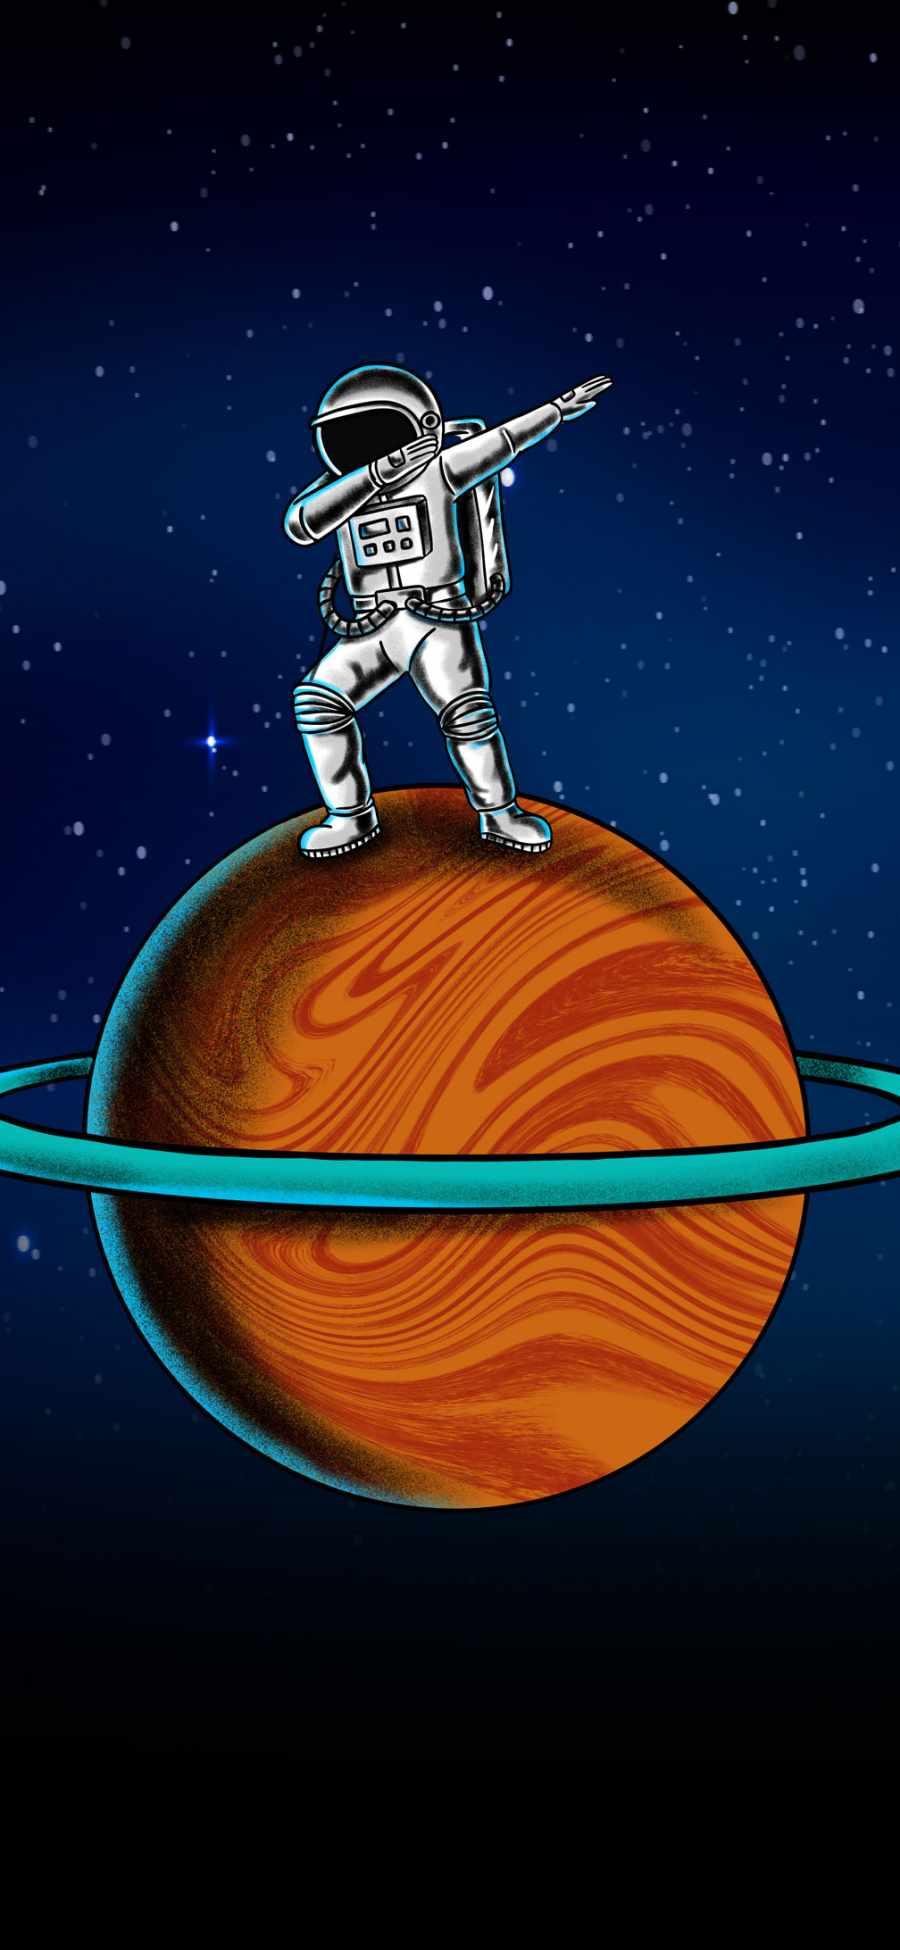 Astronaut Dabbing iPhone Wallpaper HD